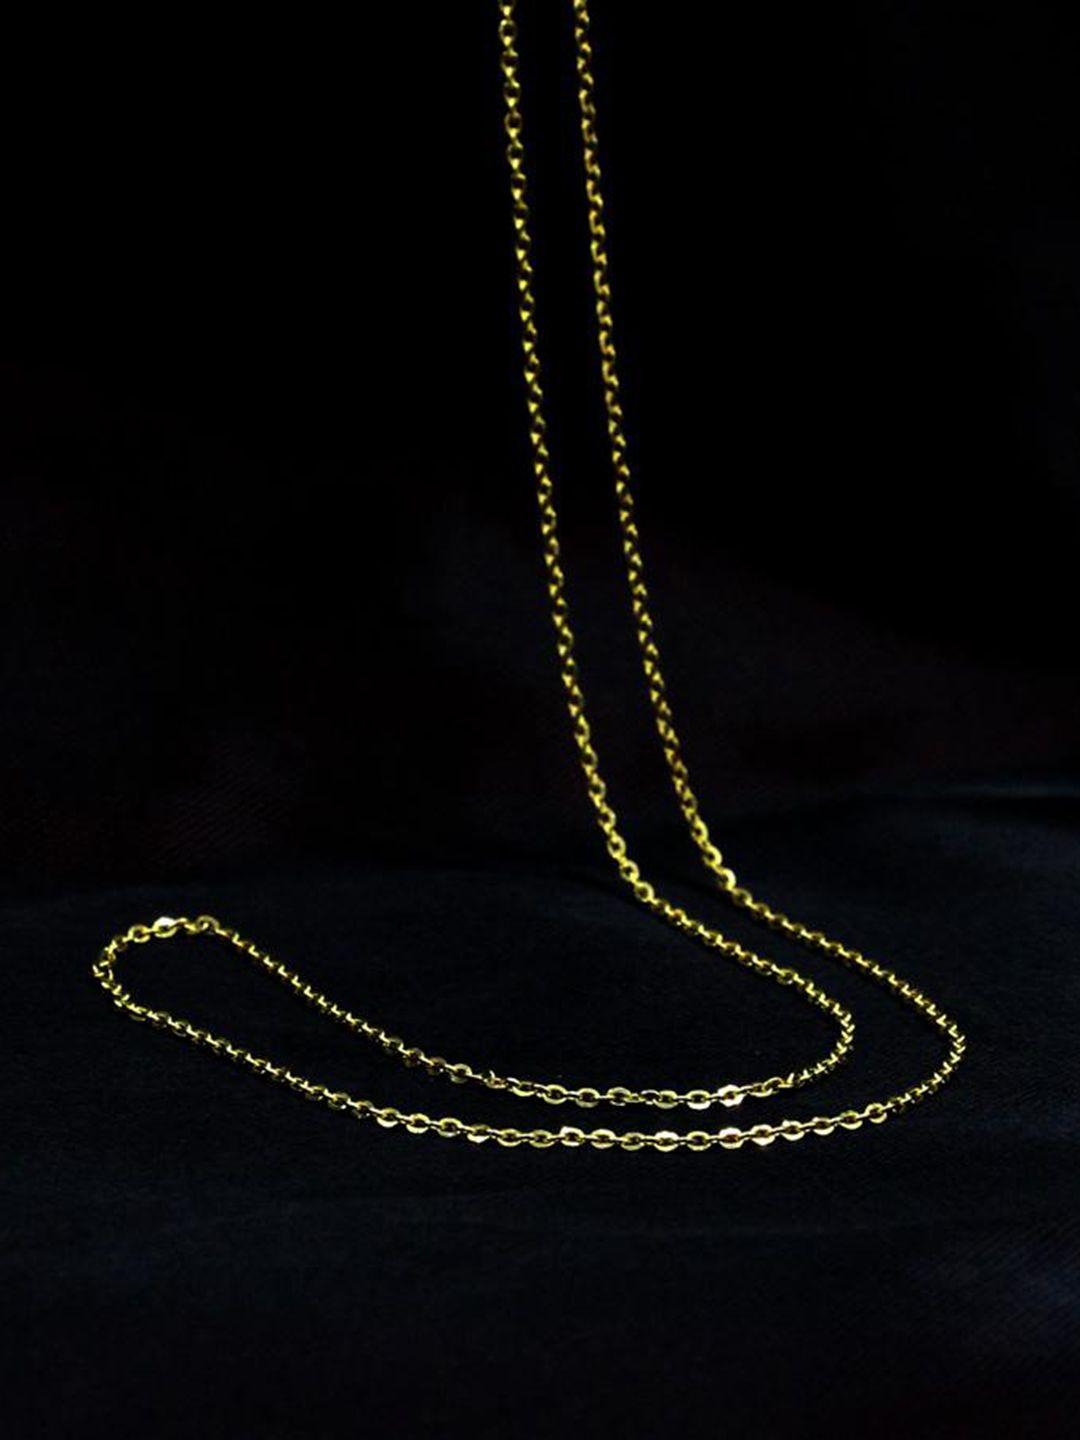 candere a kalyan jewellers company 22kt bis hallmark gold chain-2.93gm